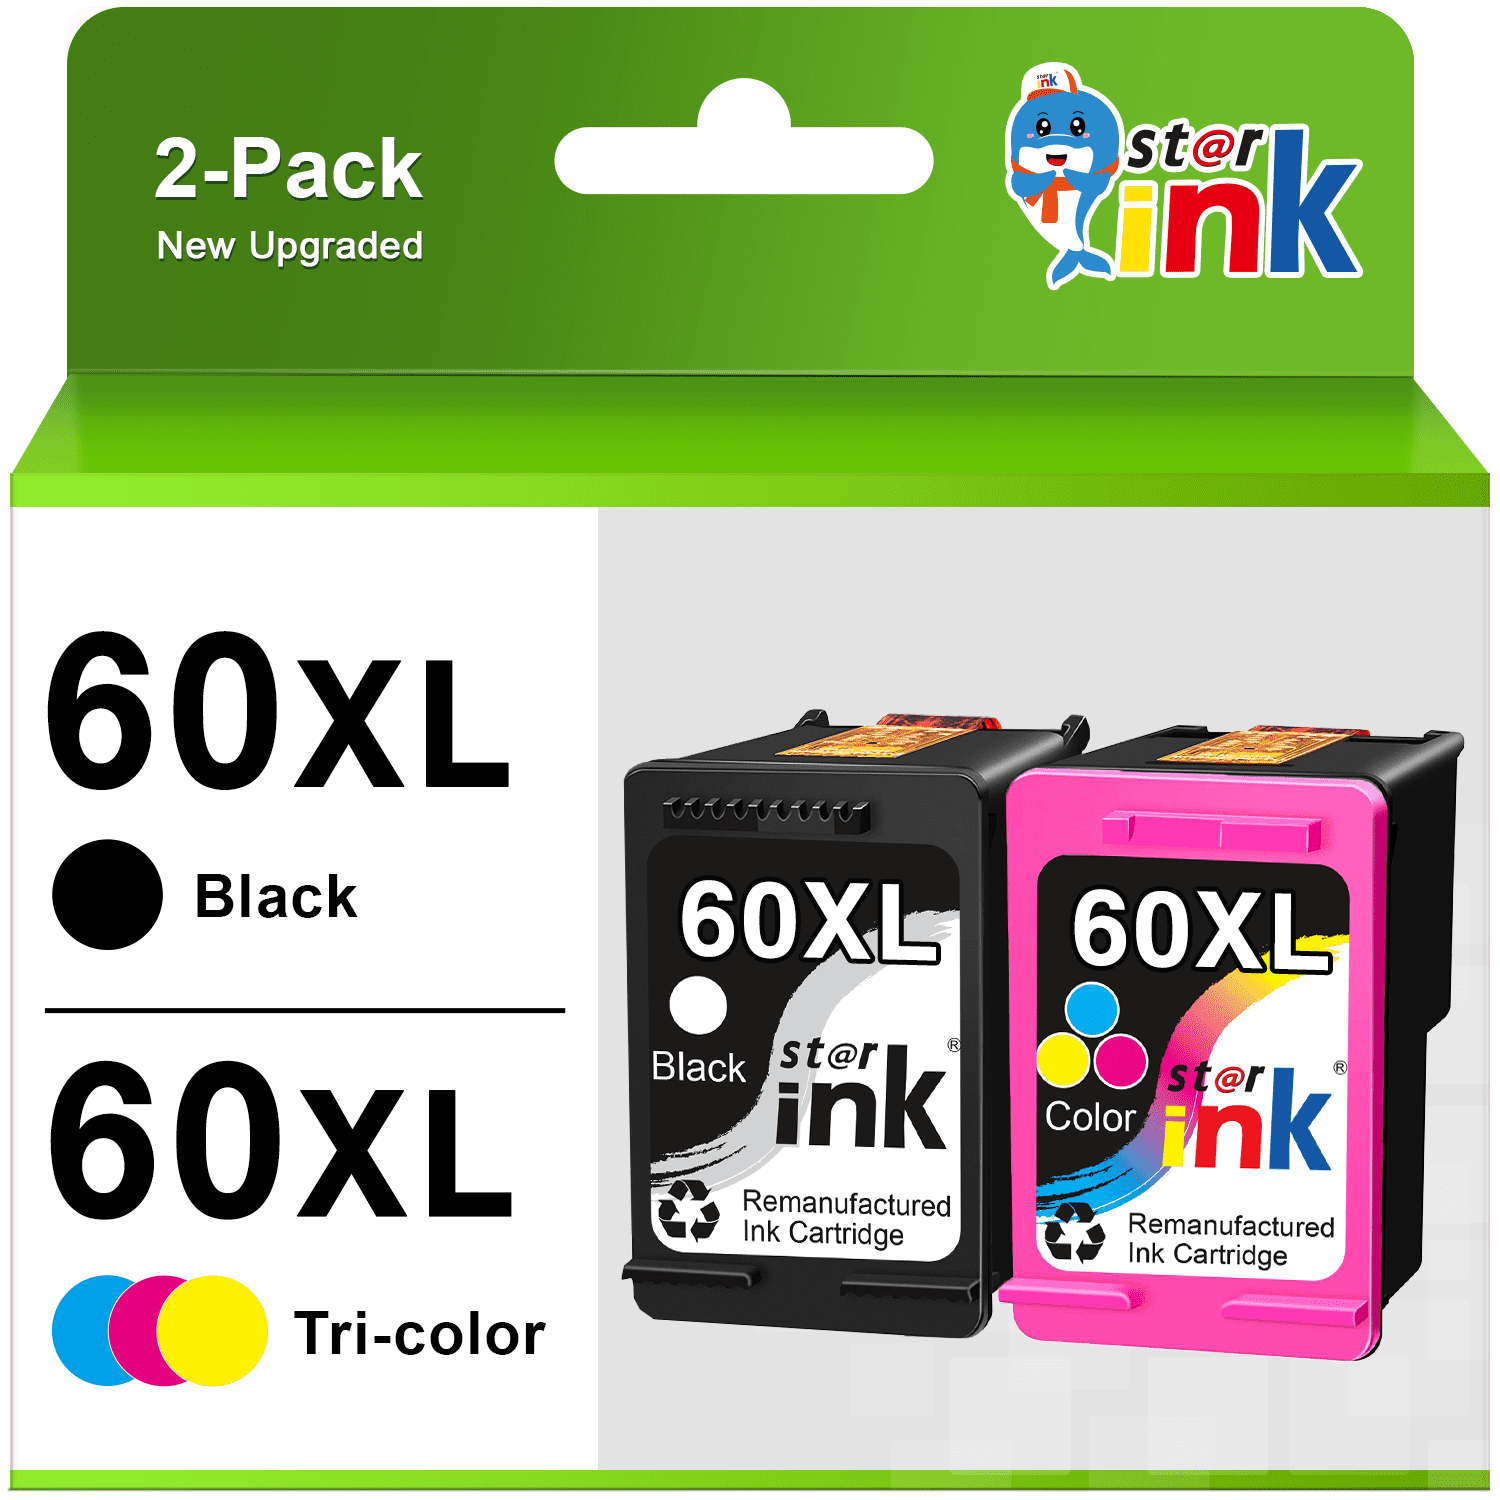 HP 302XL Black & Colour Ink Cartridge Bundle Pack